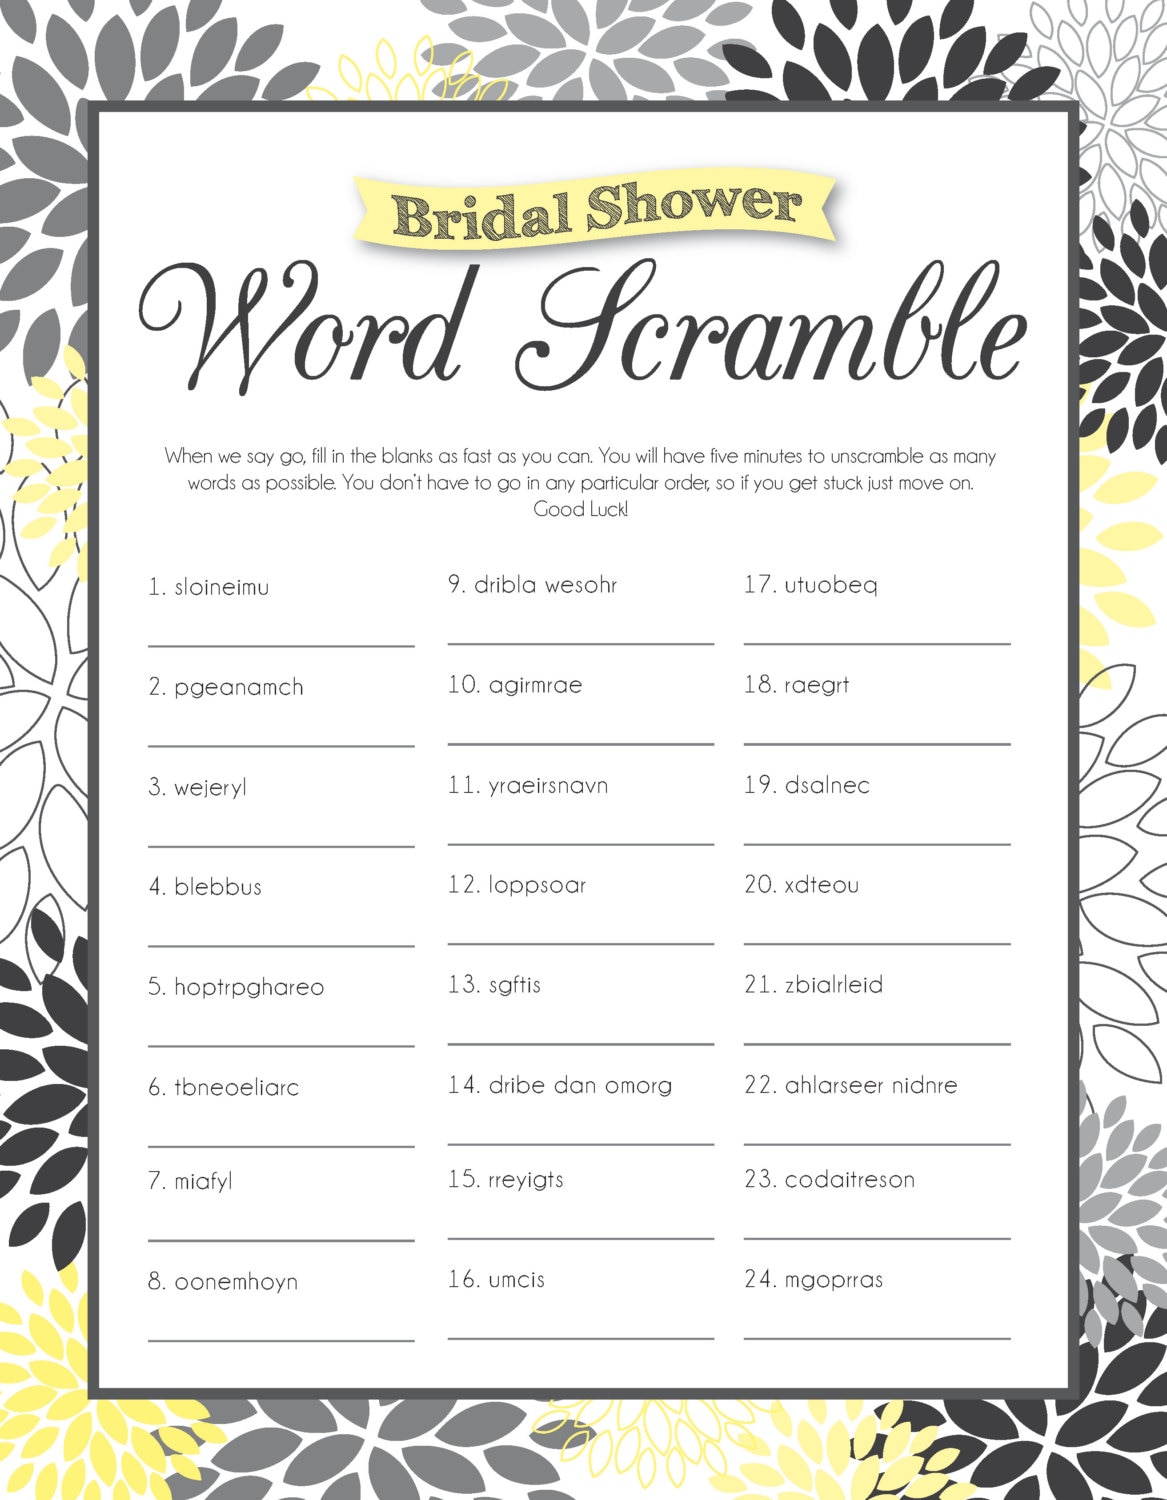 bridal shower word scramble by savethedatedesigns on etsy